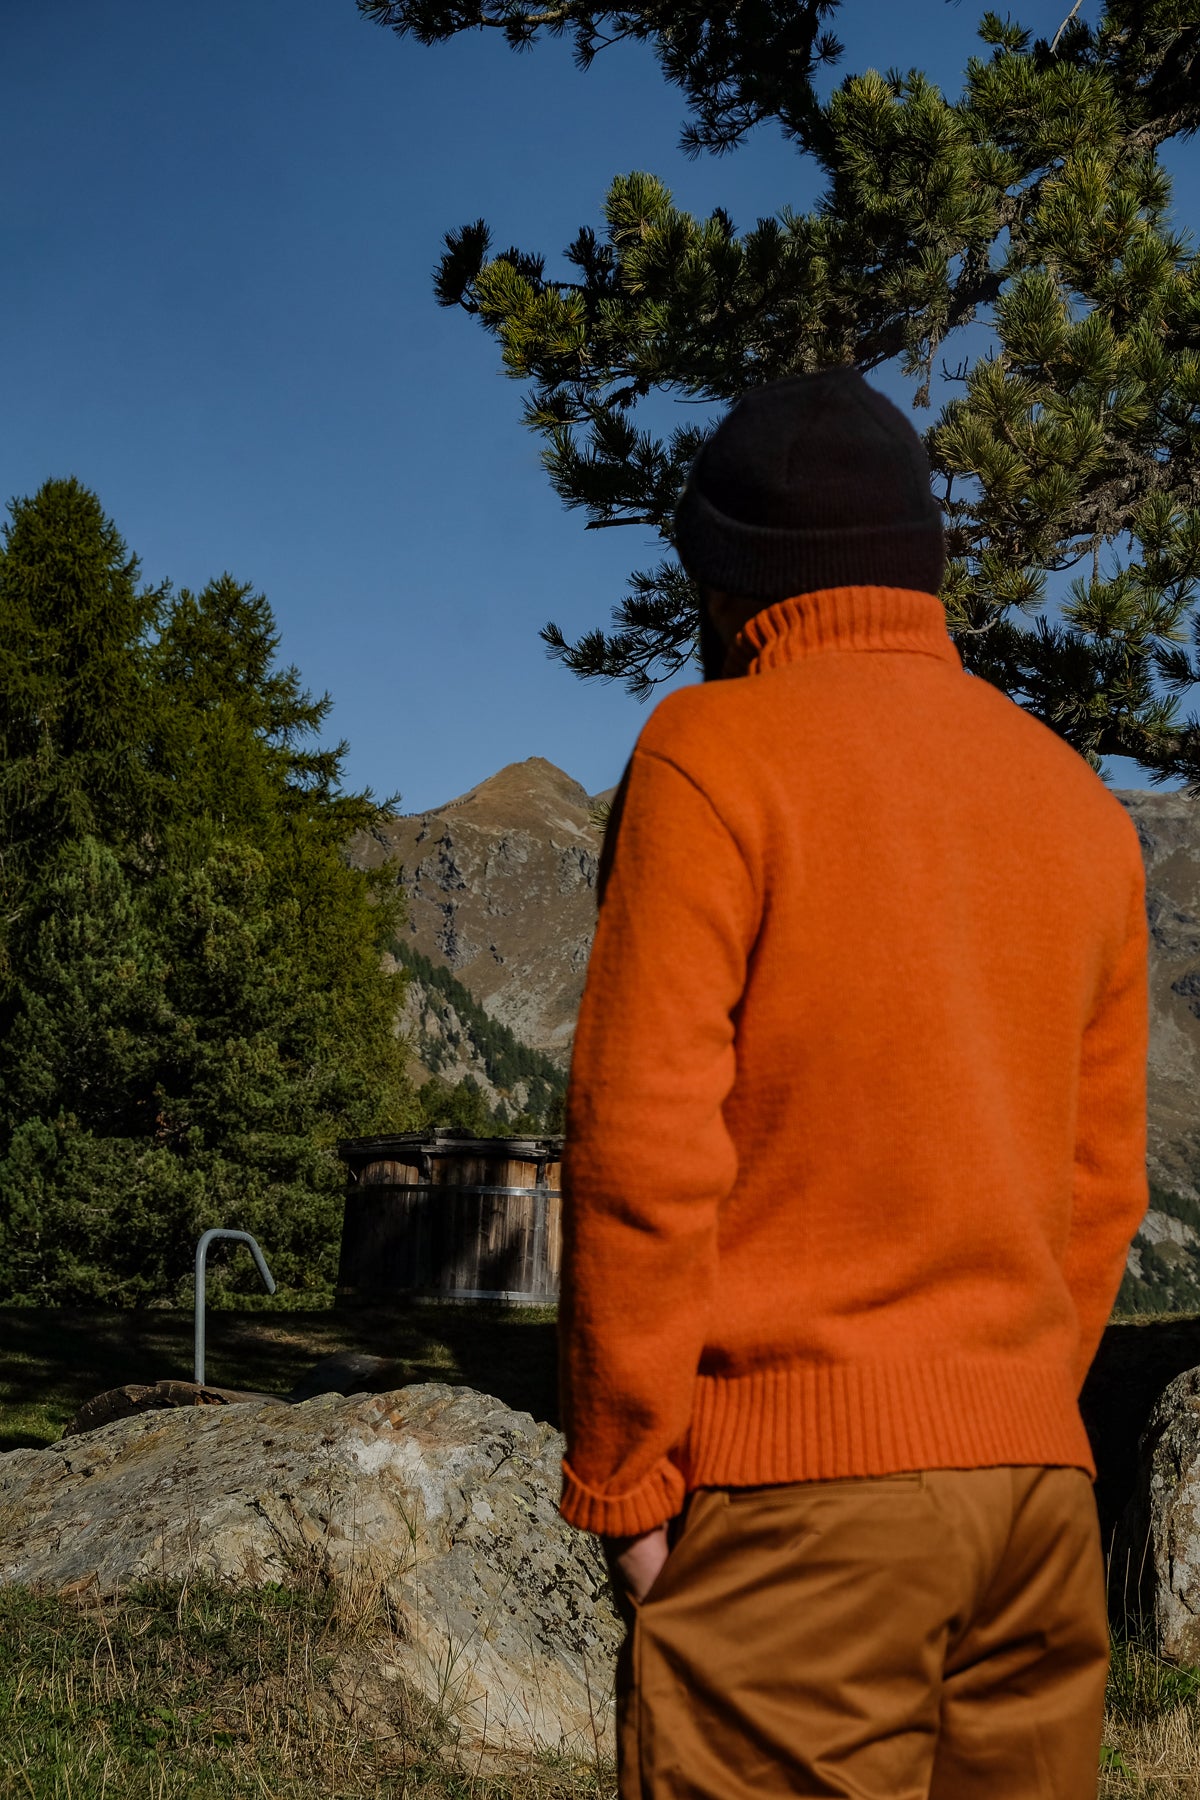 Universal Works - Roll Neck In Orange Eco Wool